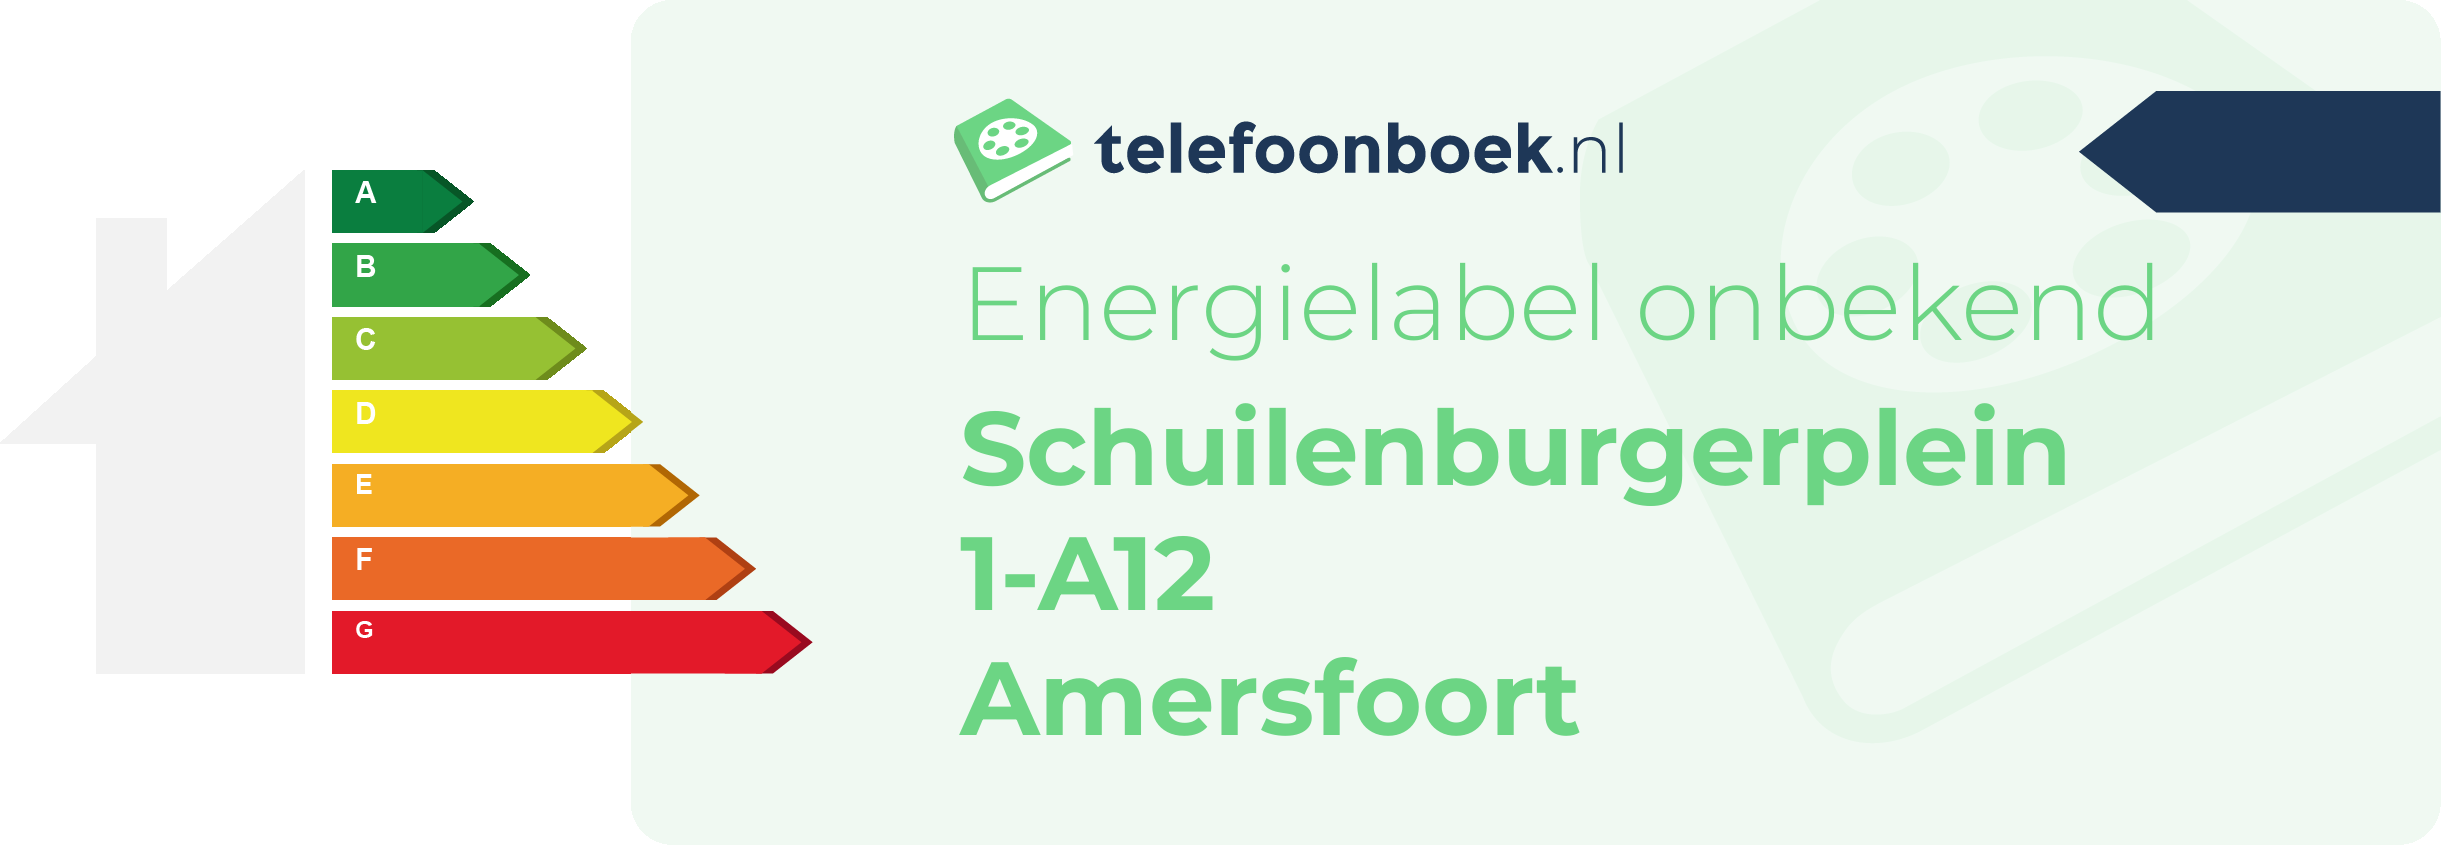 Energielabel Schuilenburgerplein 1-A12 Amersfoort